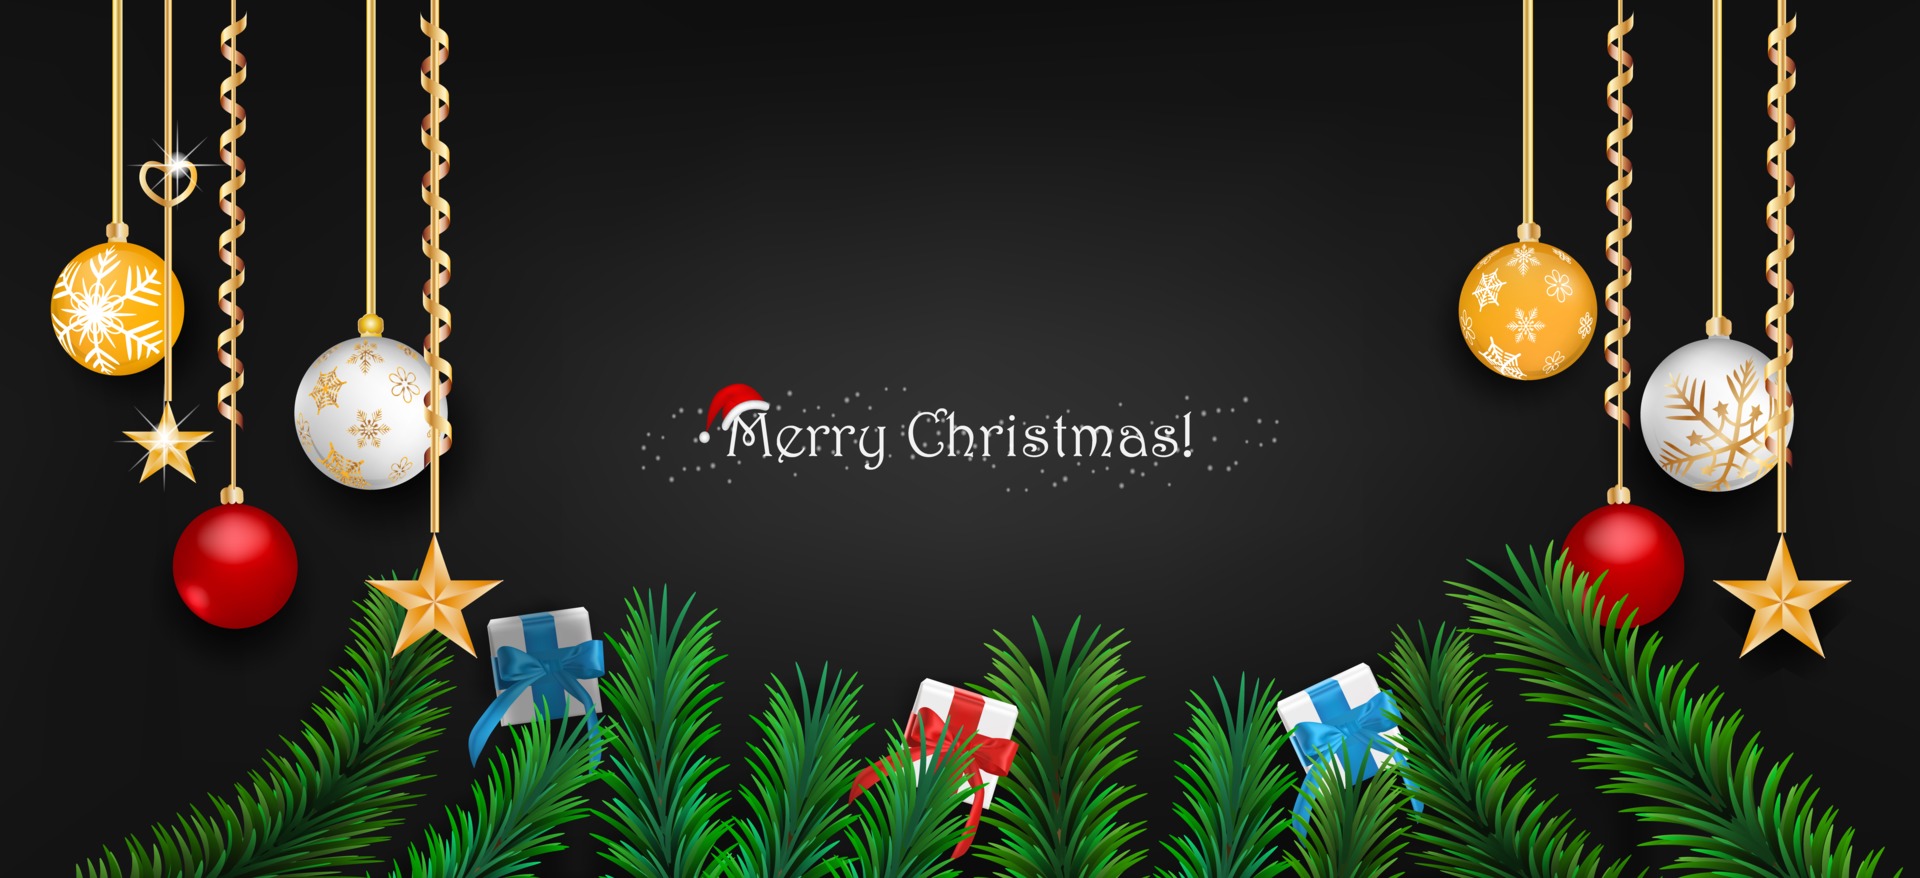 banner de feliz natal em fundo preto 2926423 Vetor no Vecteezy